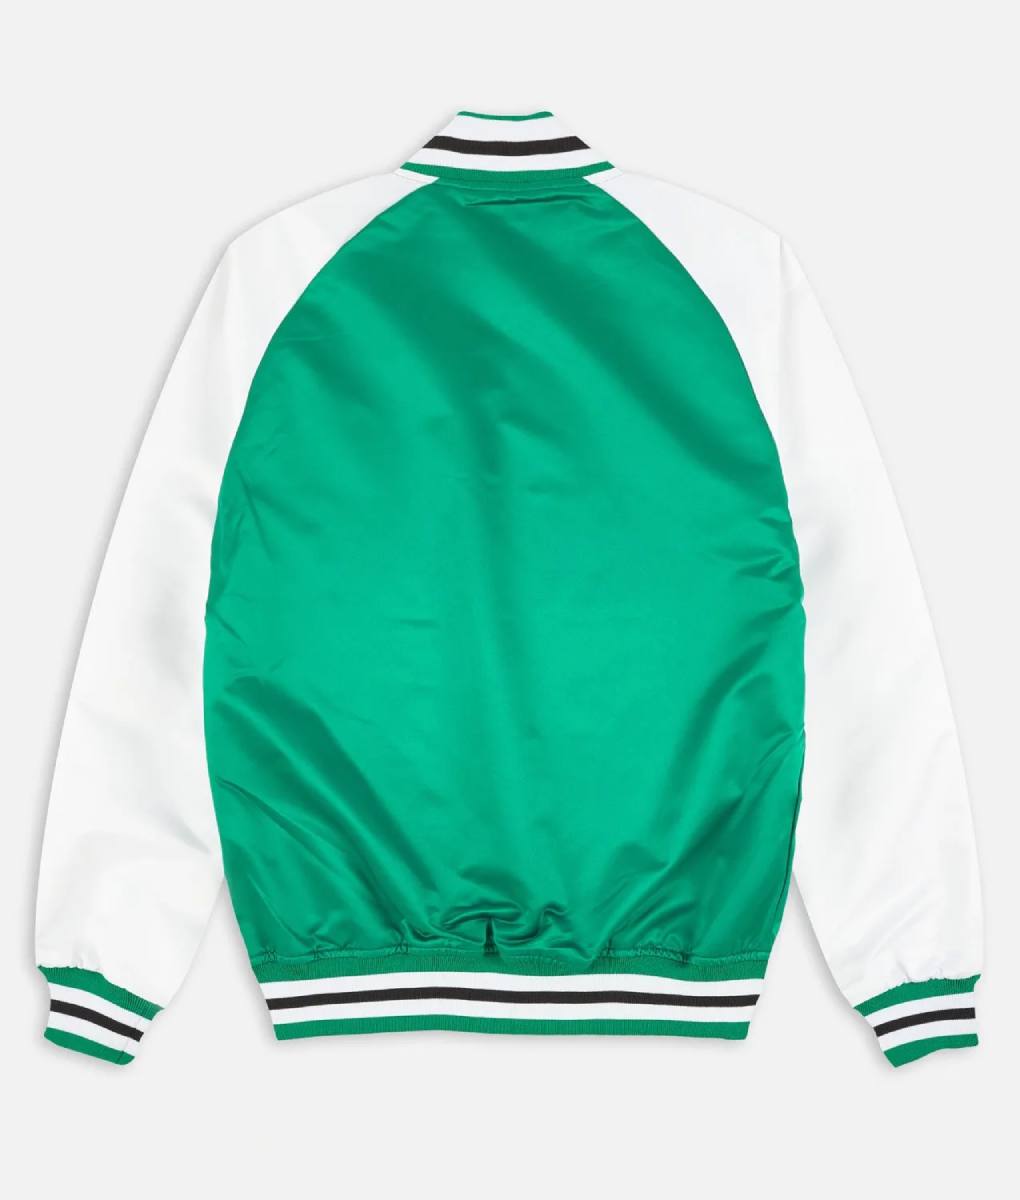 Boston Celtics Green and White Jacket (1)